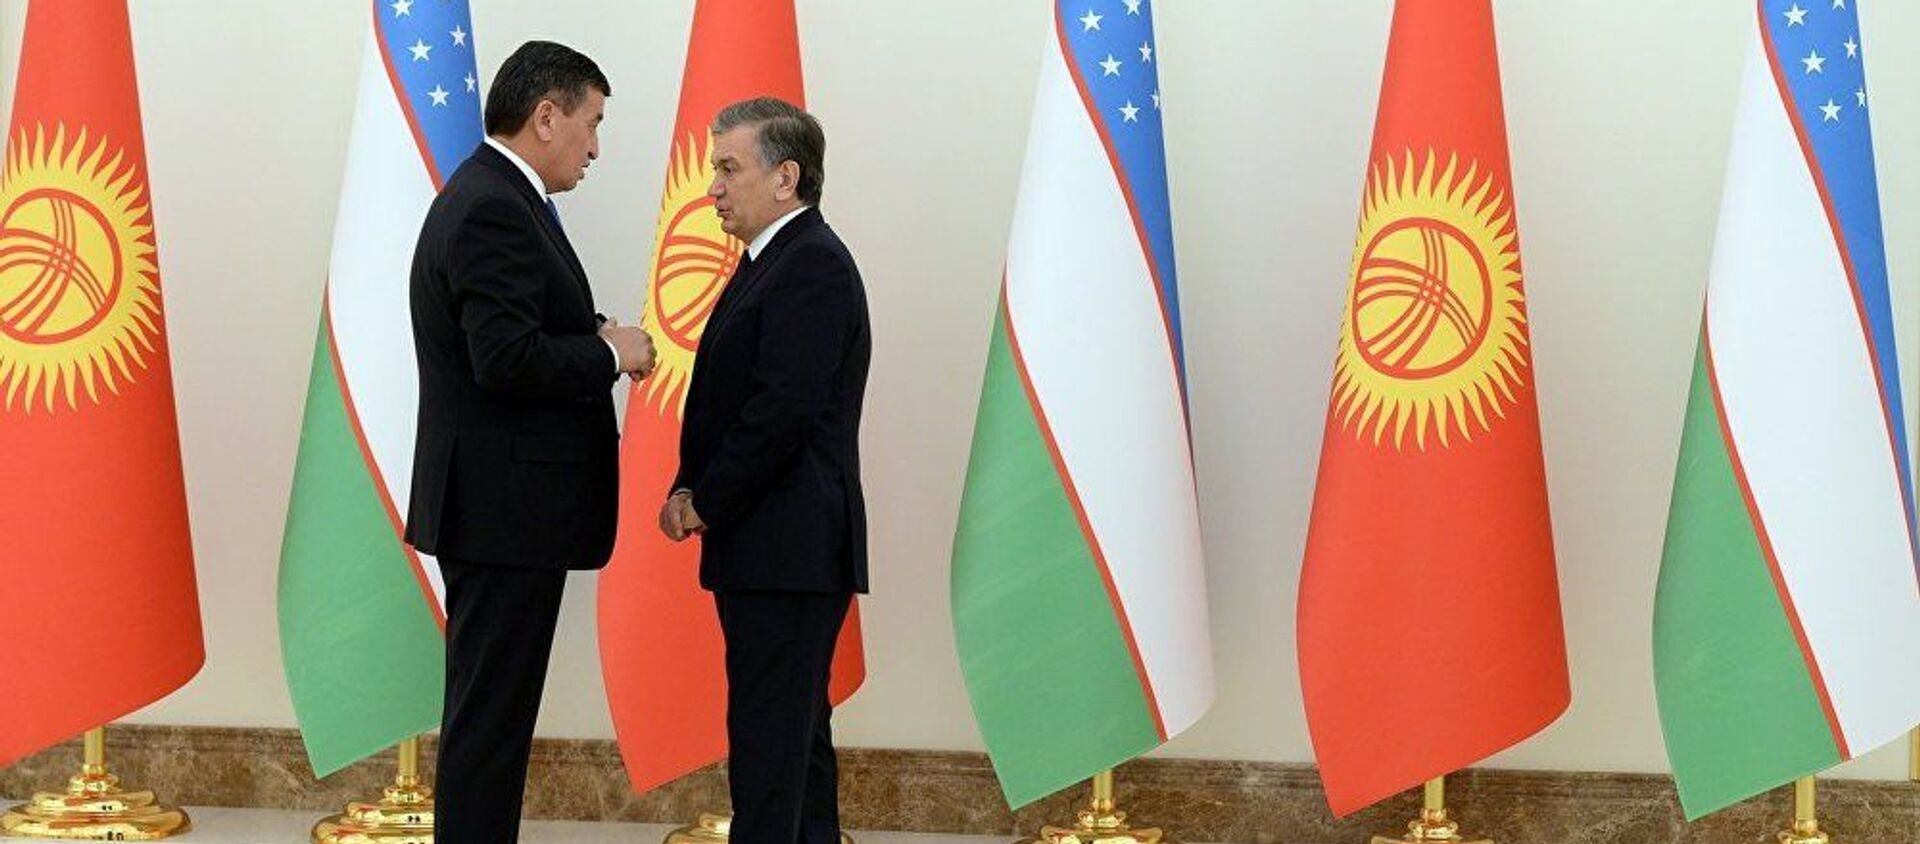 Президент Кыргызстана Сооронбай Жээнбеков и президент Узбекистана Шавкат Мирзиёев - Sputnik Узбекистан, 1920, 01.06.2020